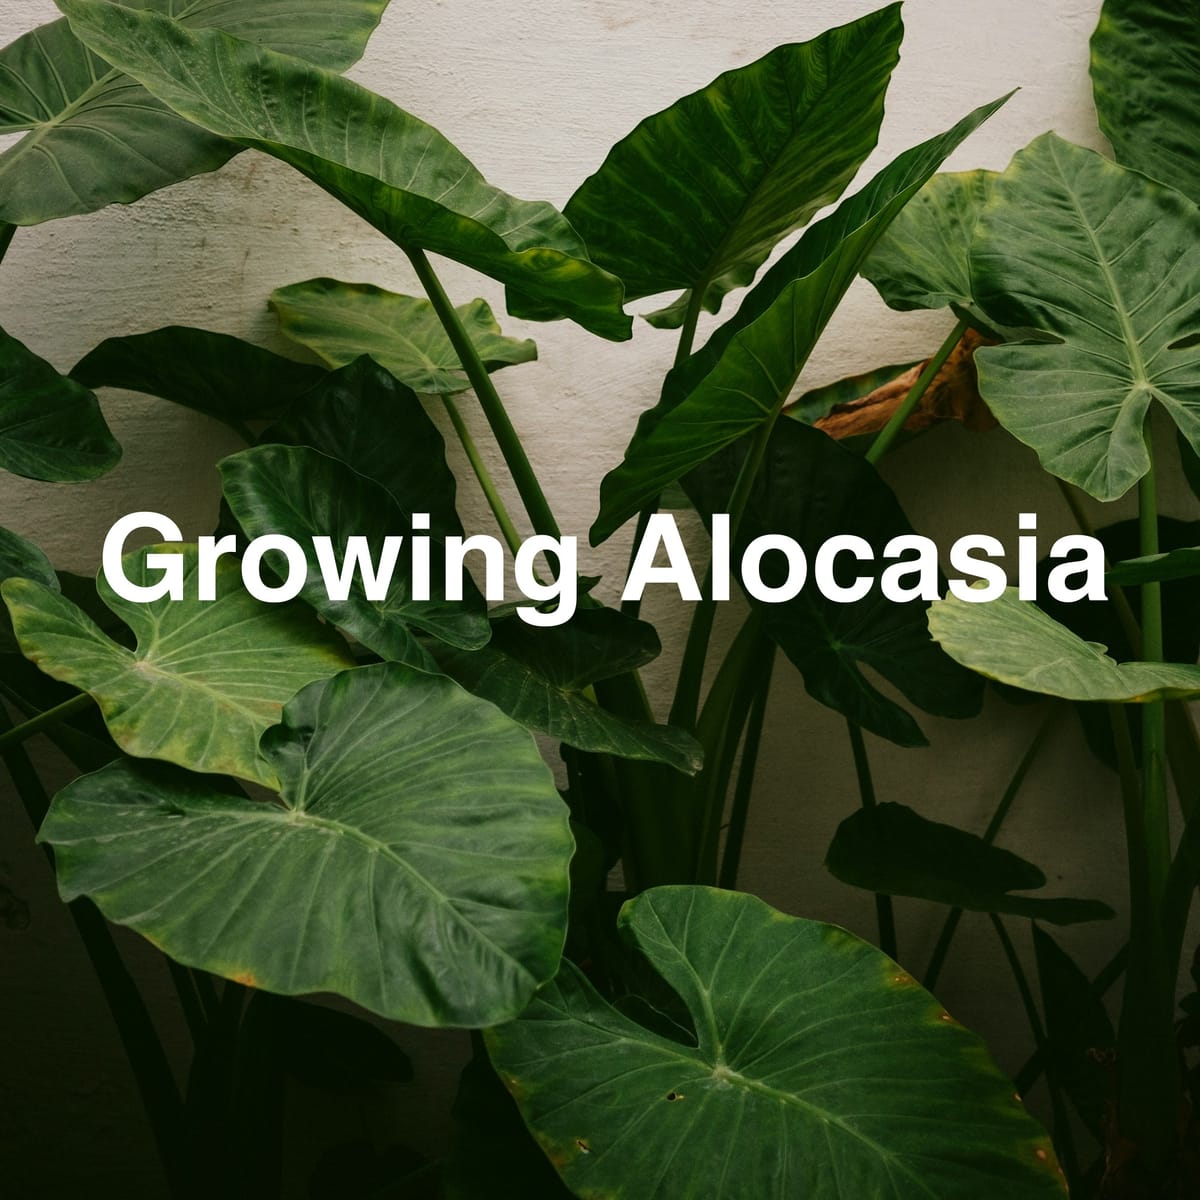 How to Grow Alocasia